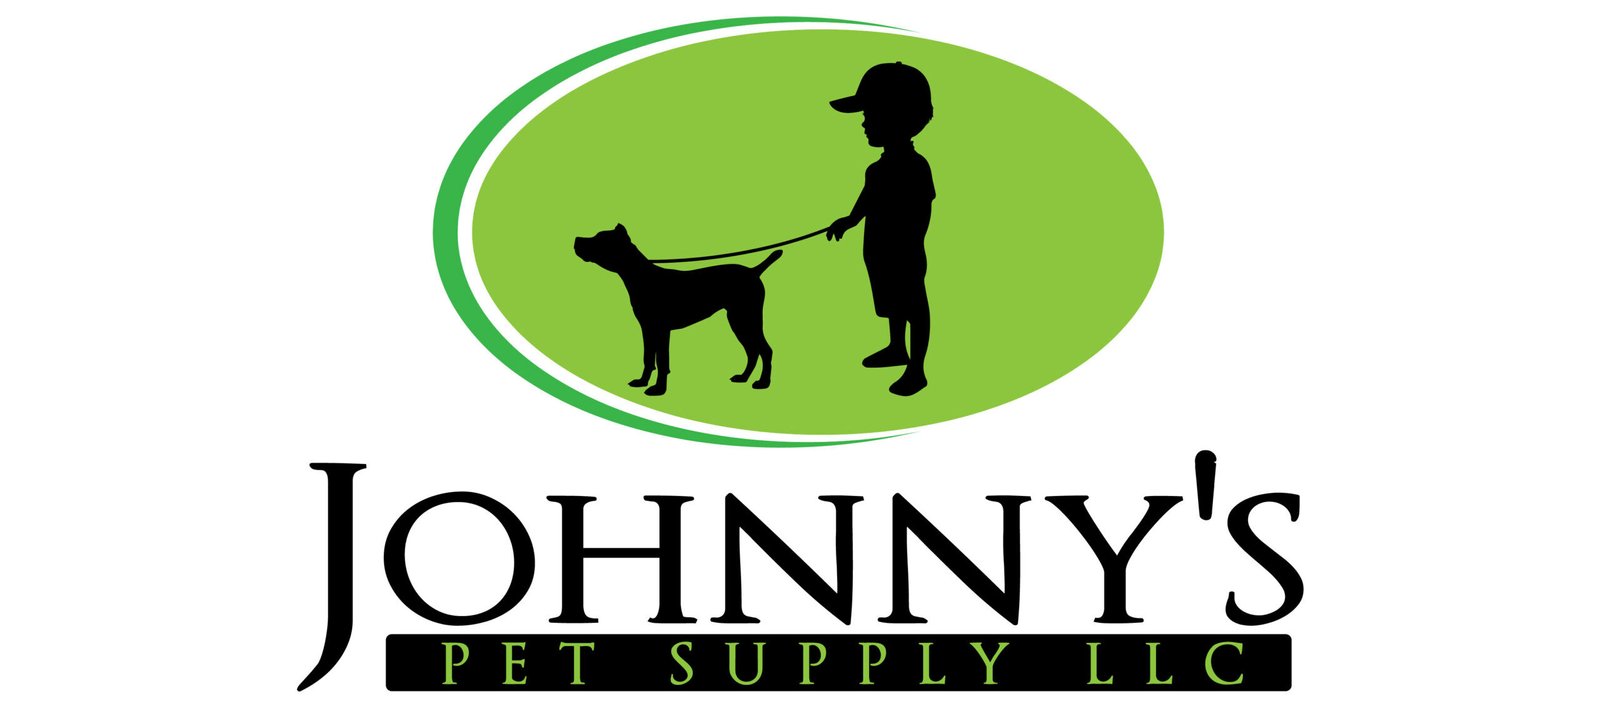 Johnny's Pet Supply llc logo